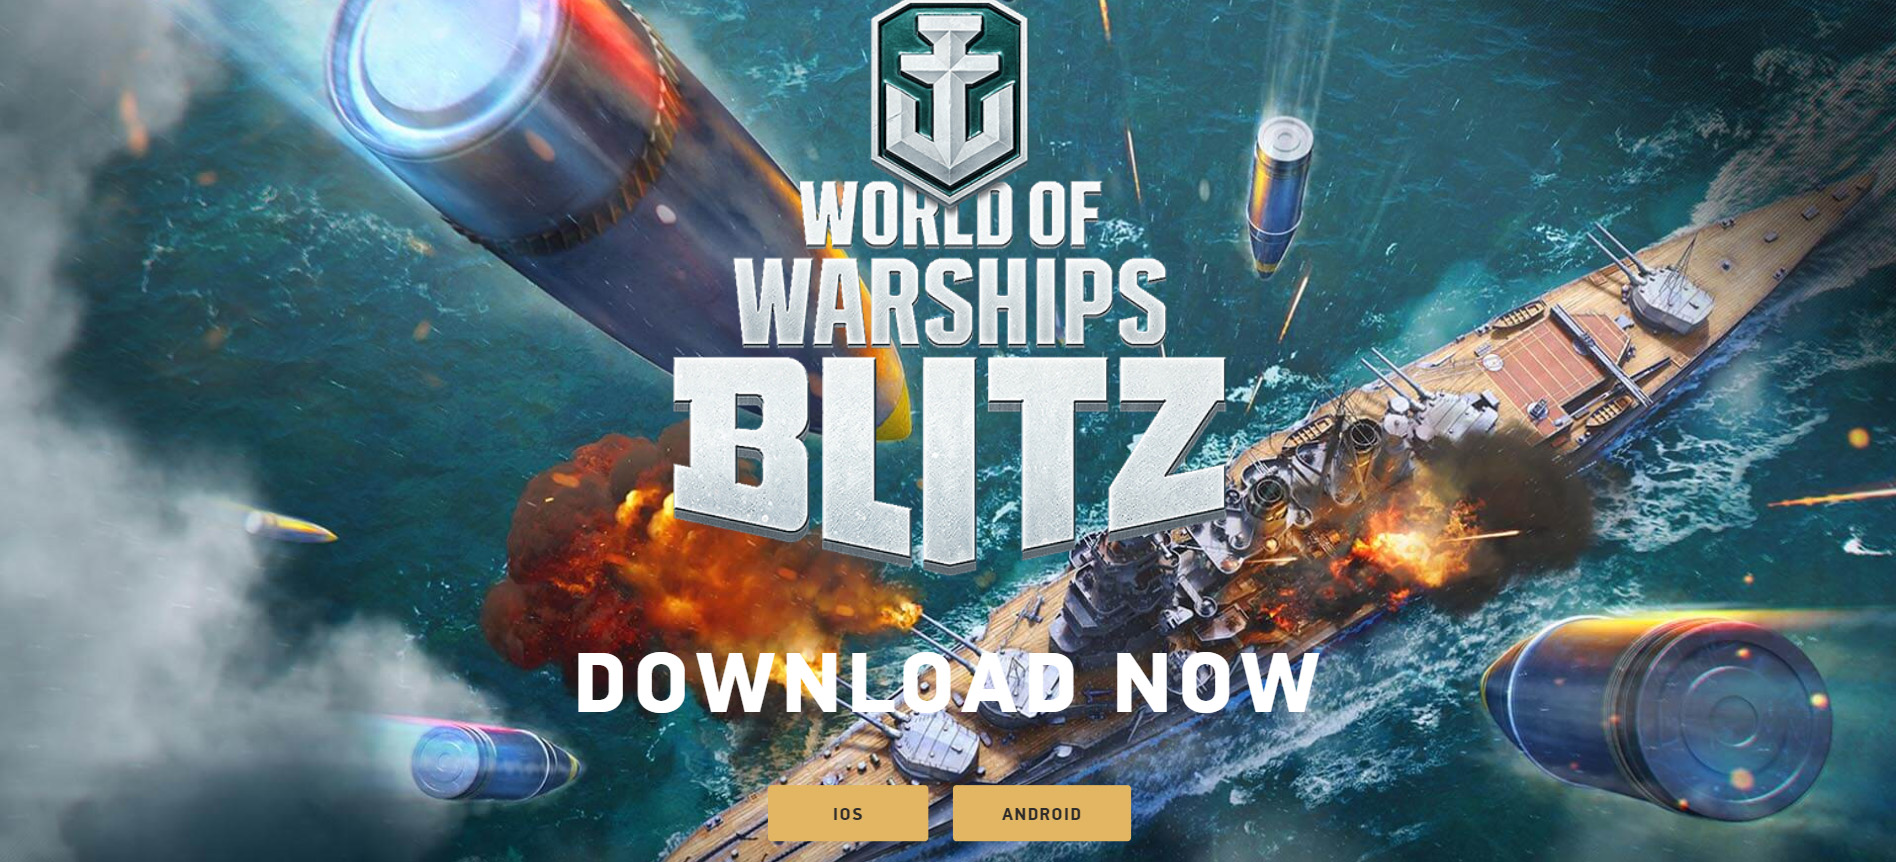 world of warships blitz 1.3